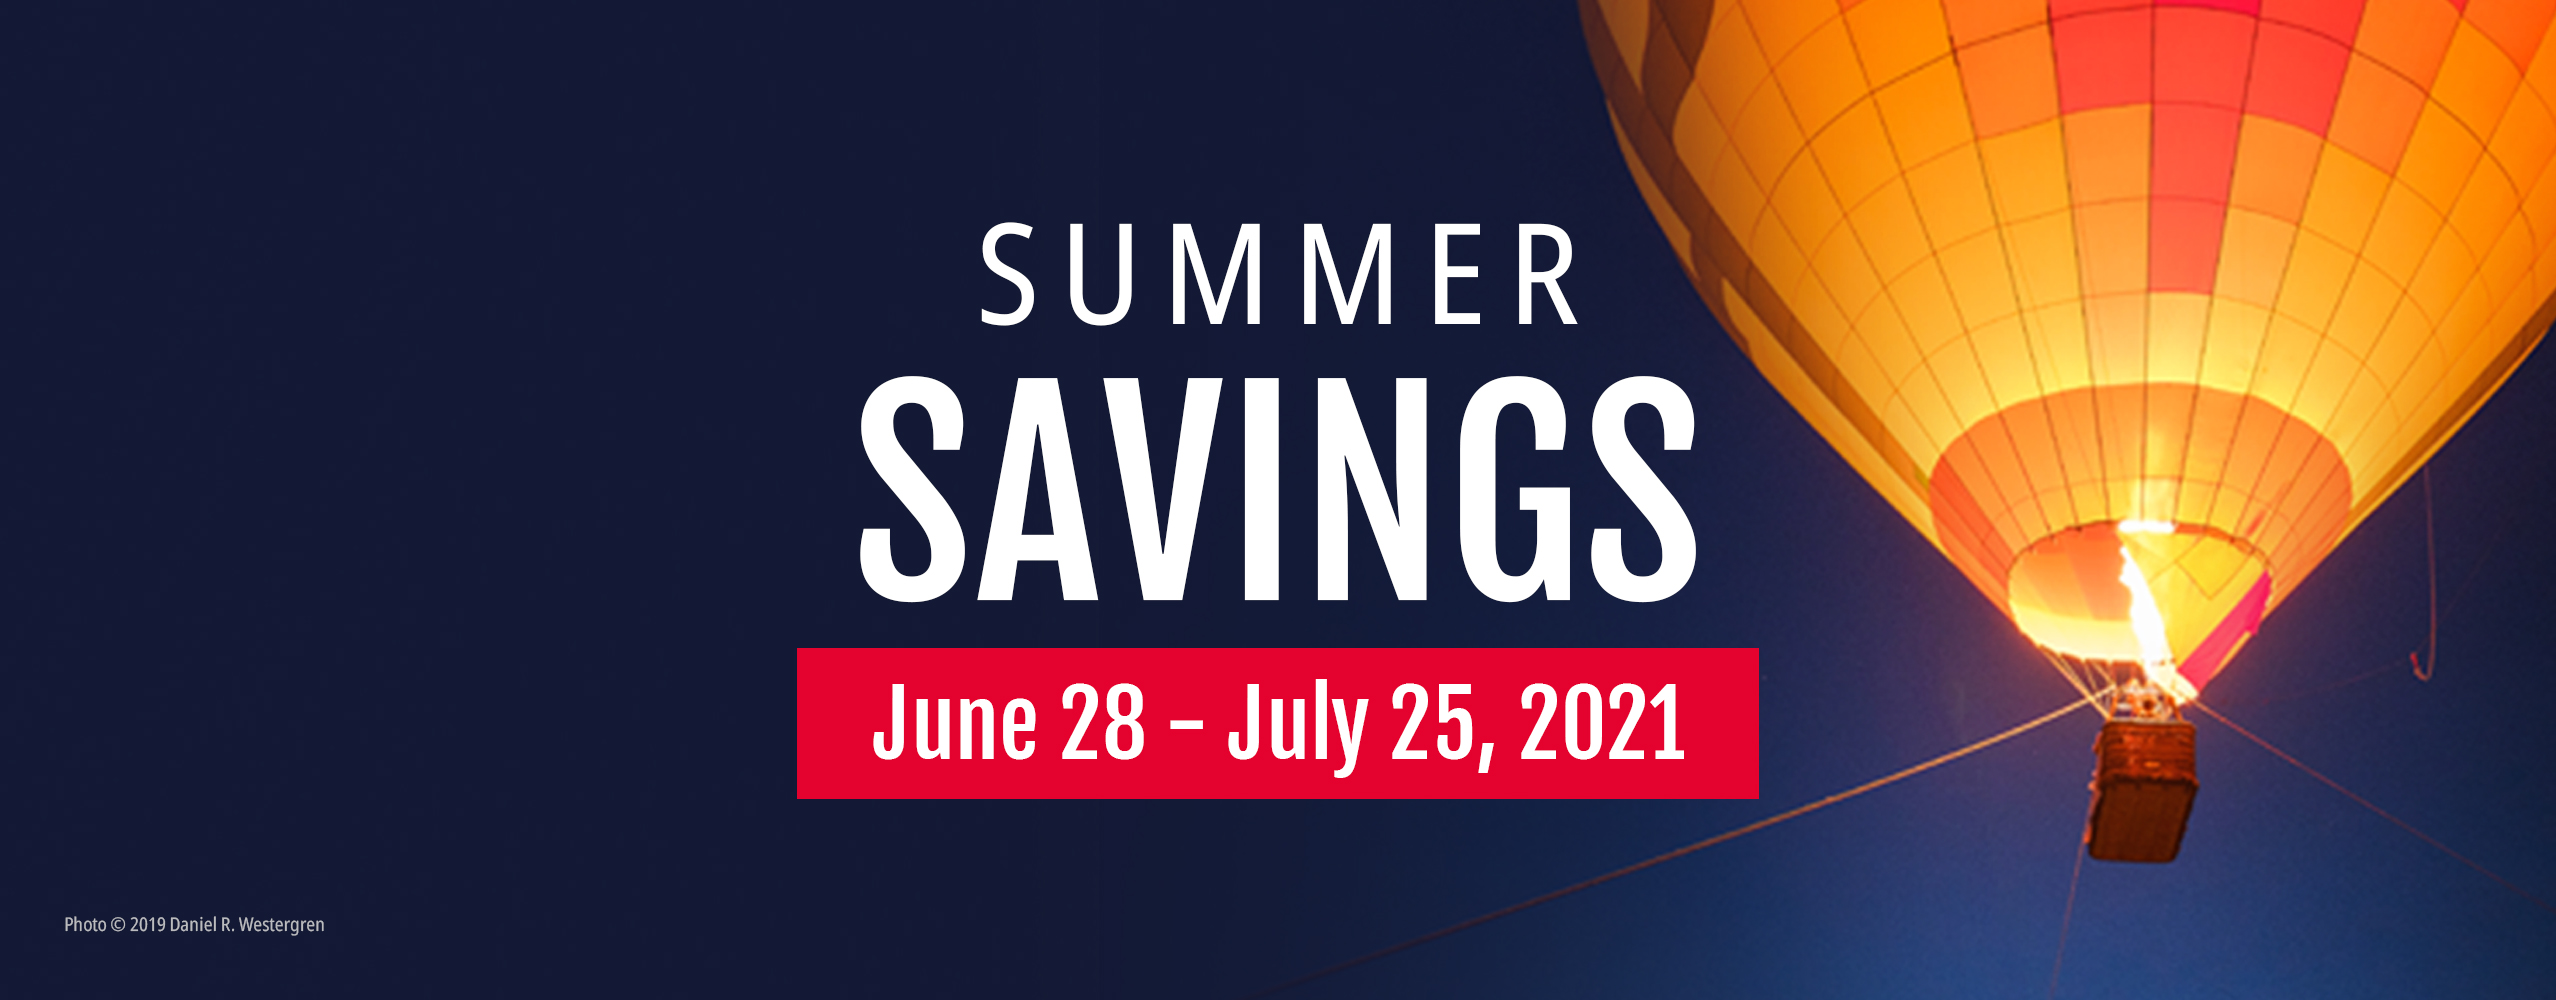 summer-savings-desktop-header-2556x1000-1